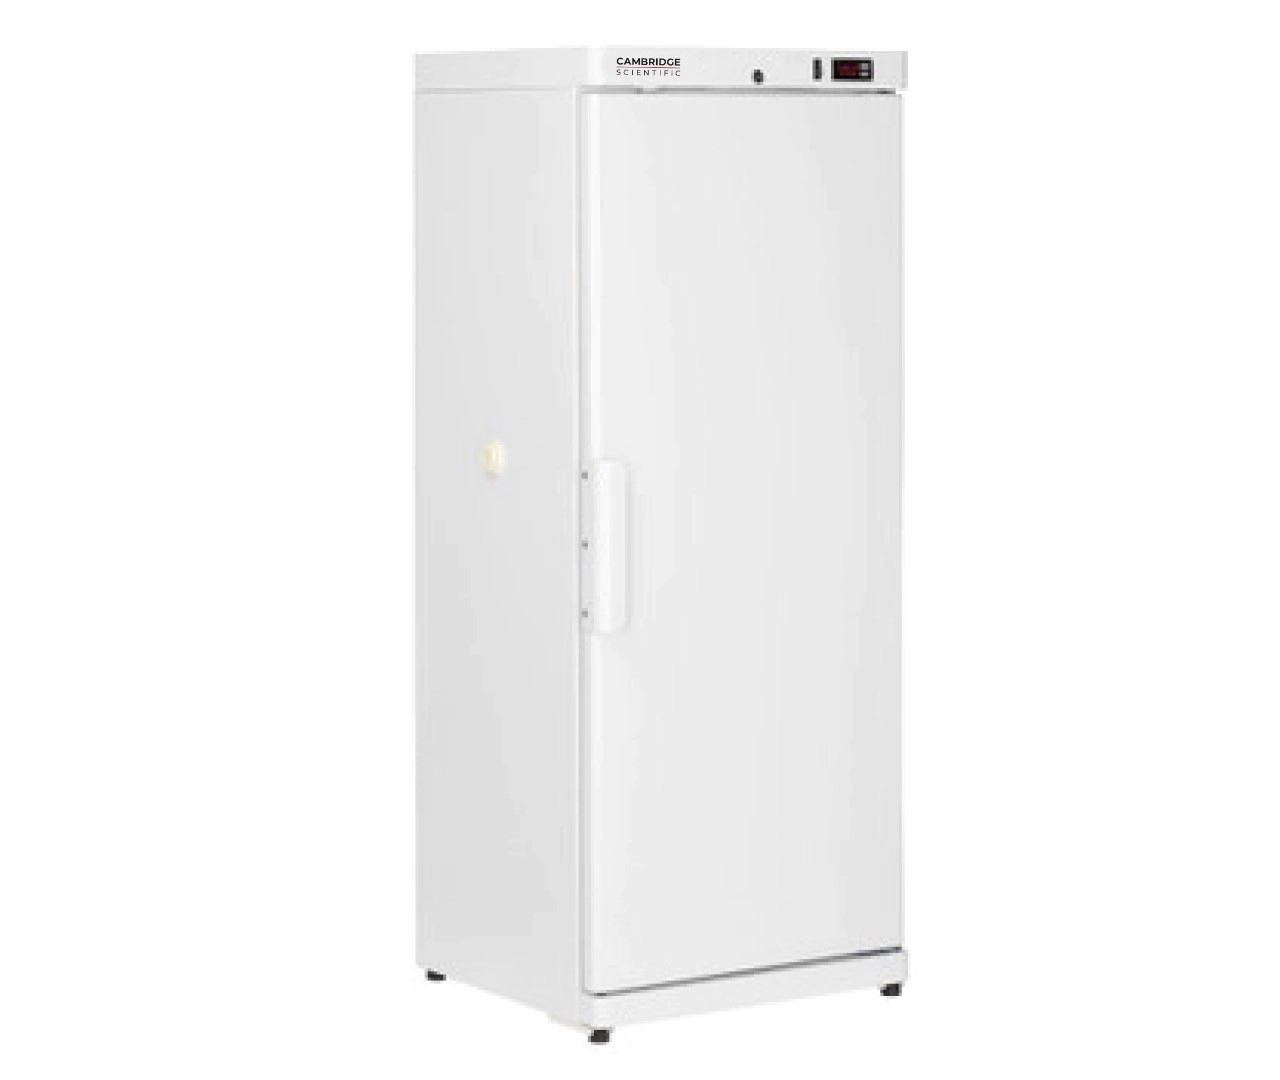 Cambridge Scientific K210SDR *NEW* Refrigerator